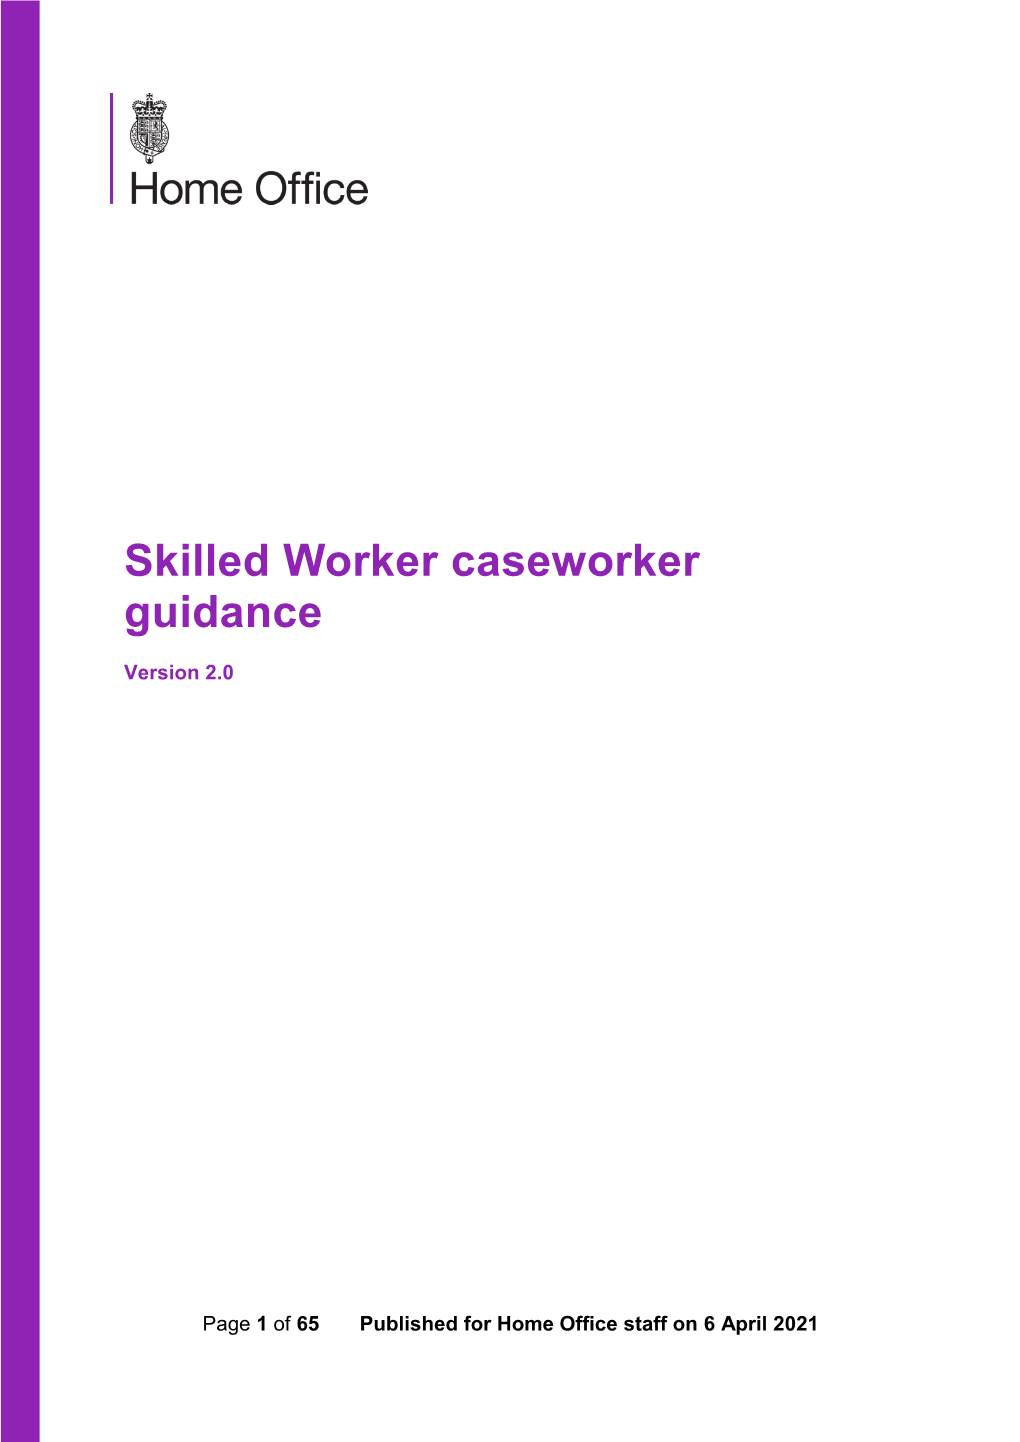 Skilled Worker Caseworker Guidance